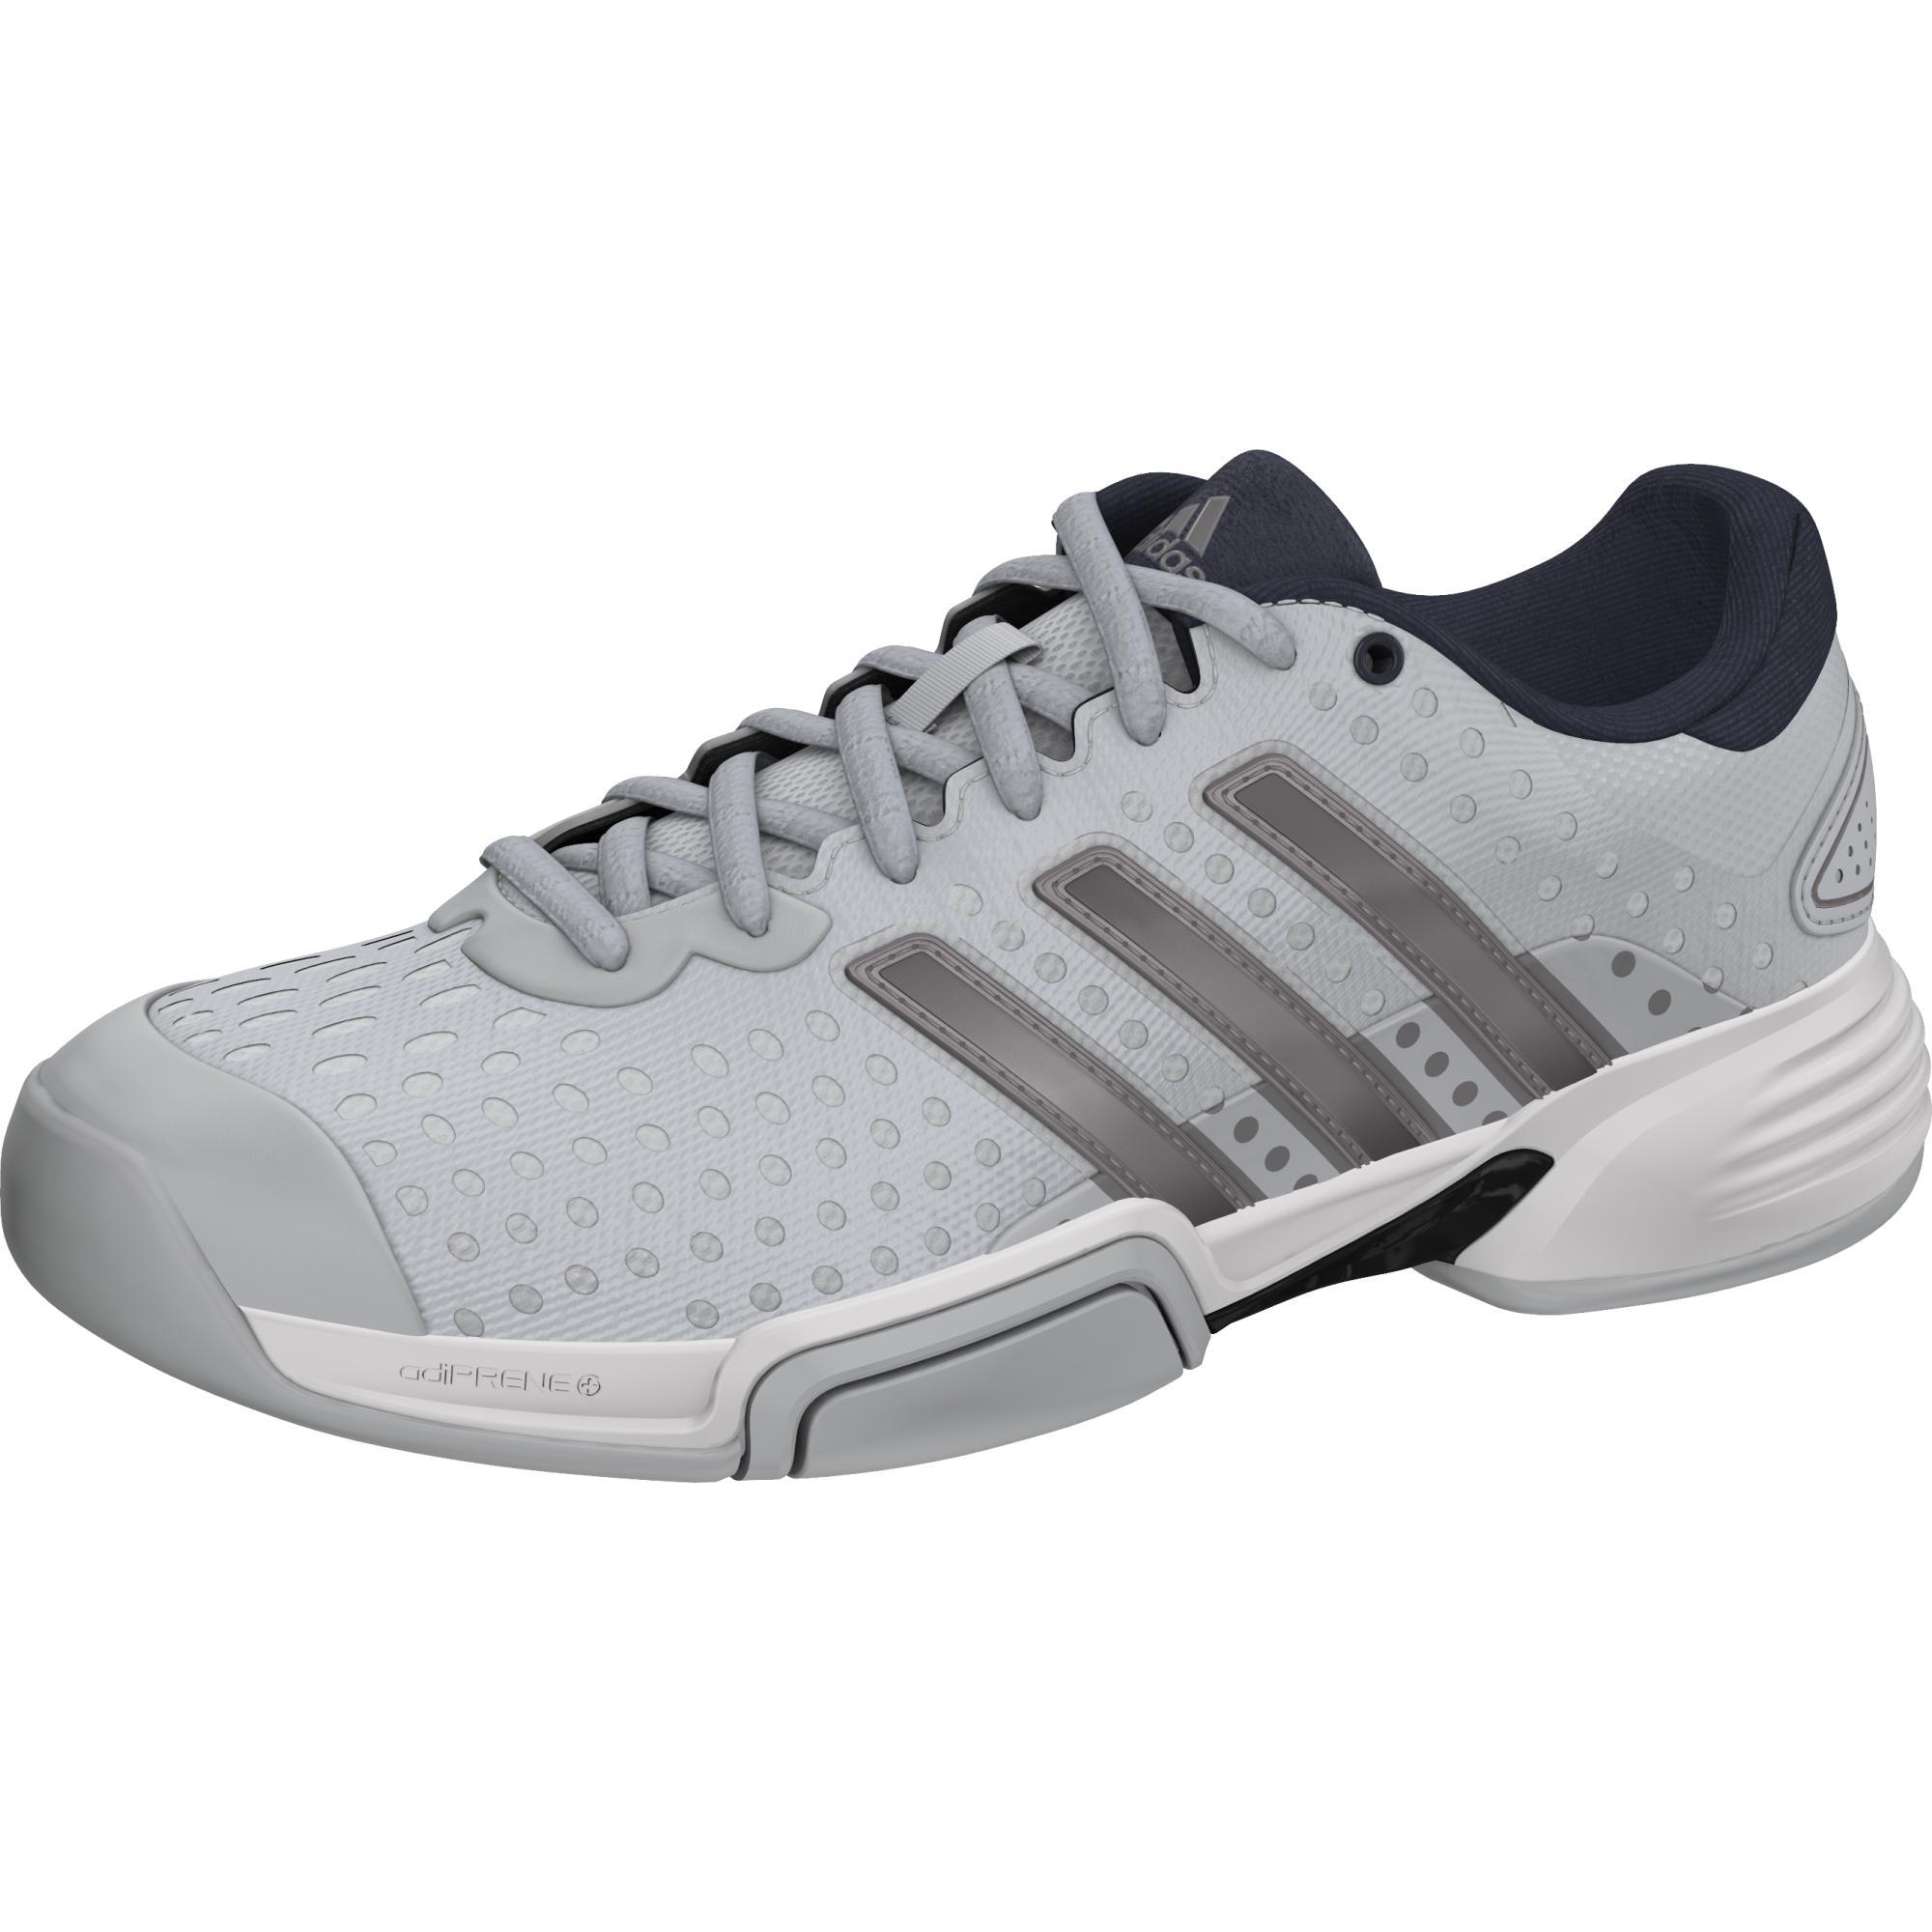 adidas tennis shoes